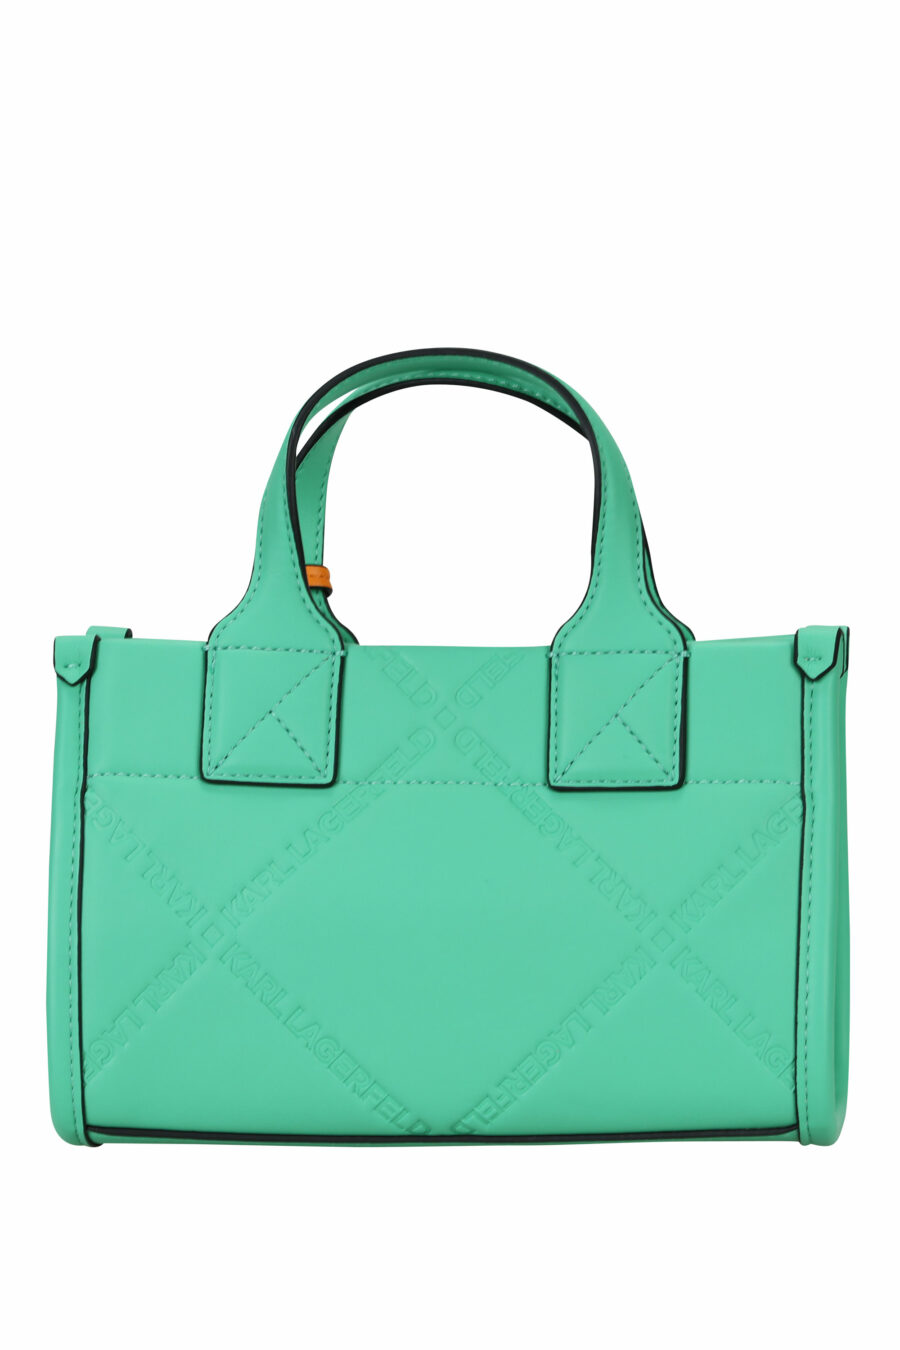 Tote bag mini verde con logo en charms - 8720744672456 2